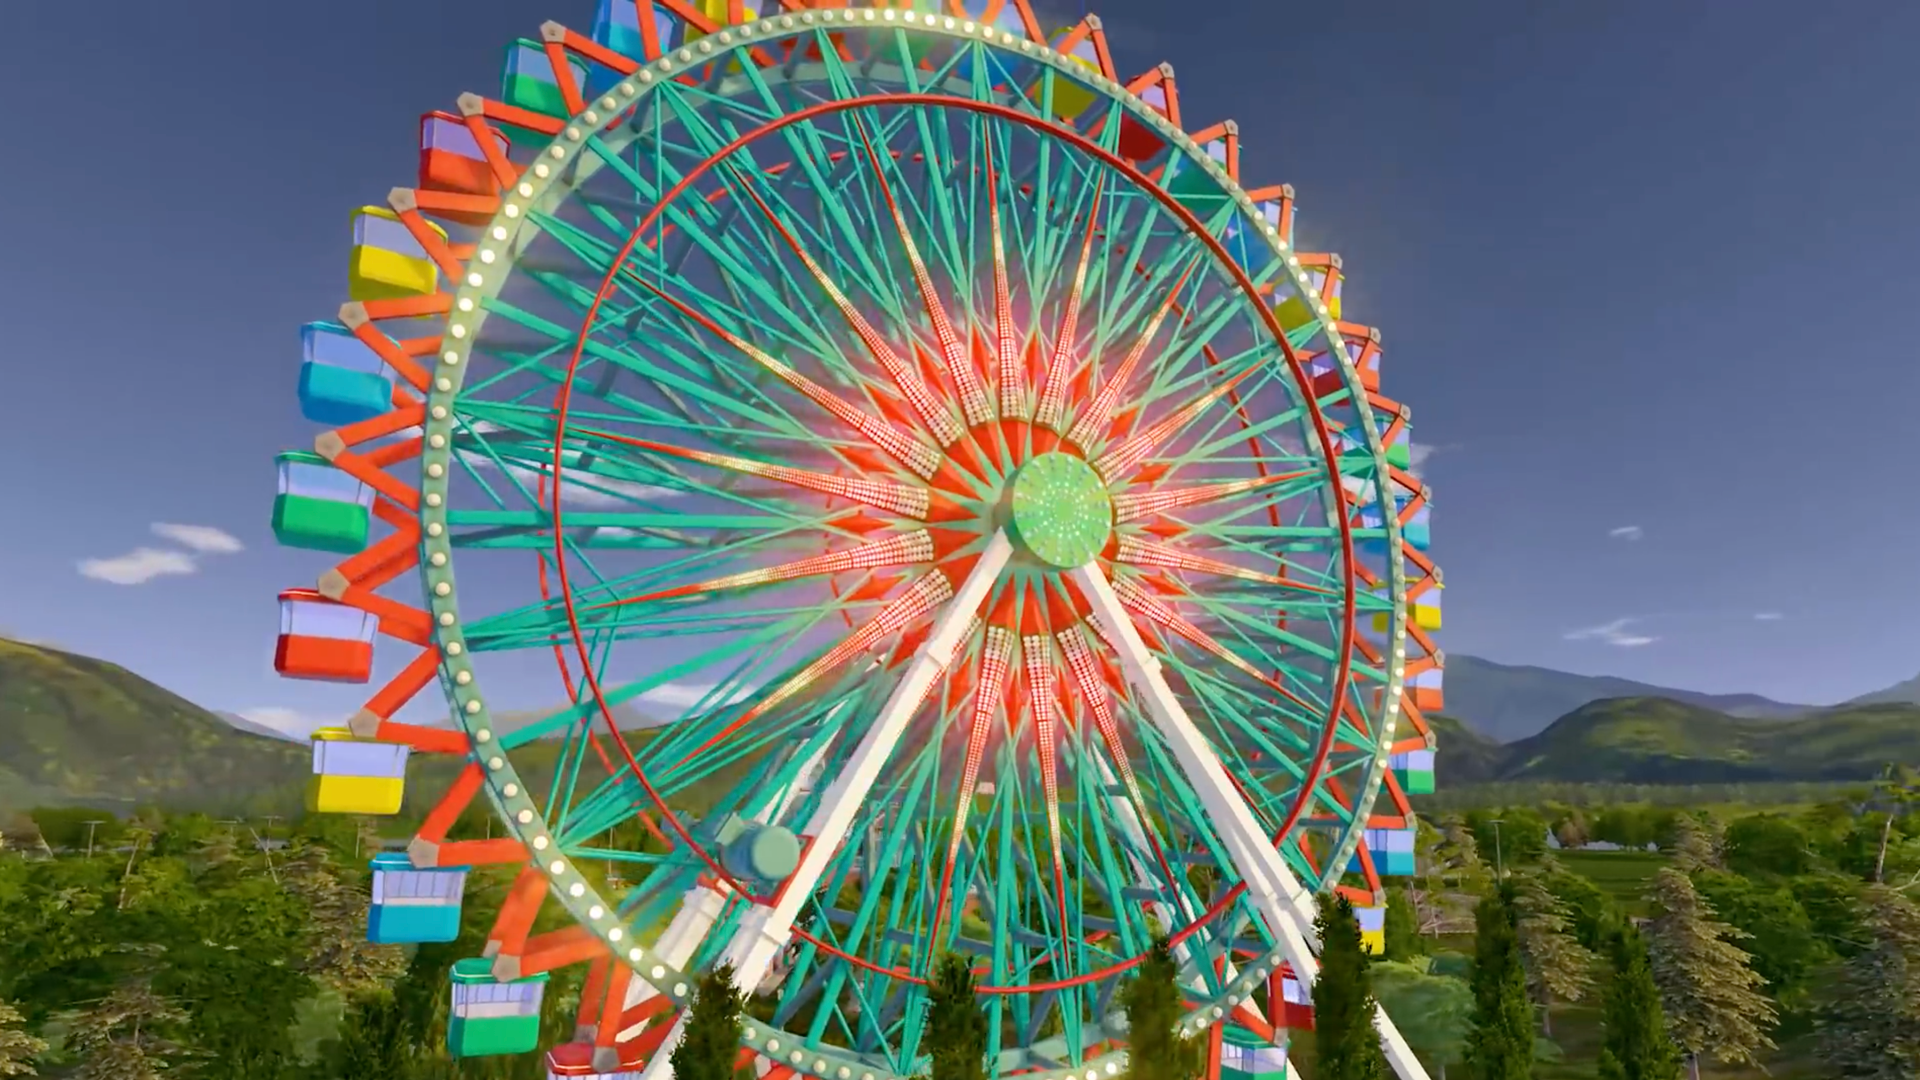 RollerCoaster Tycoon World Trailer 